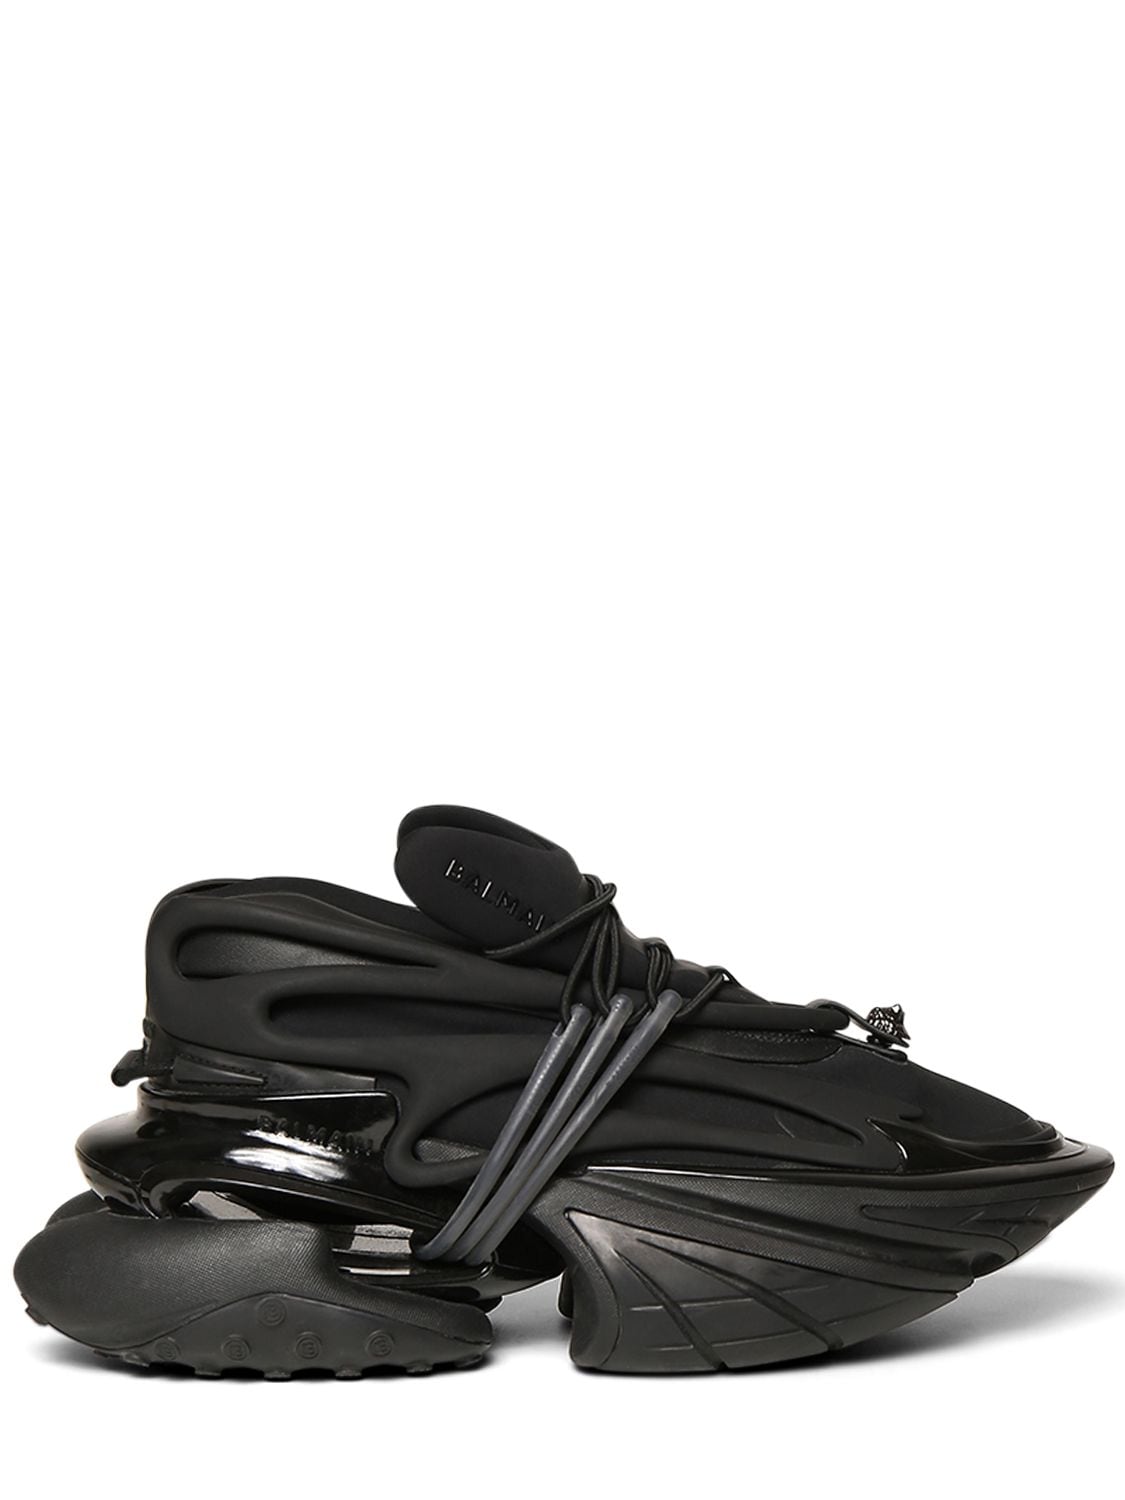 Balmain Unicorn Neoprene & Calfskin Sneakers In Black